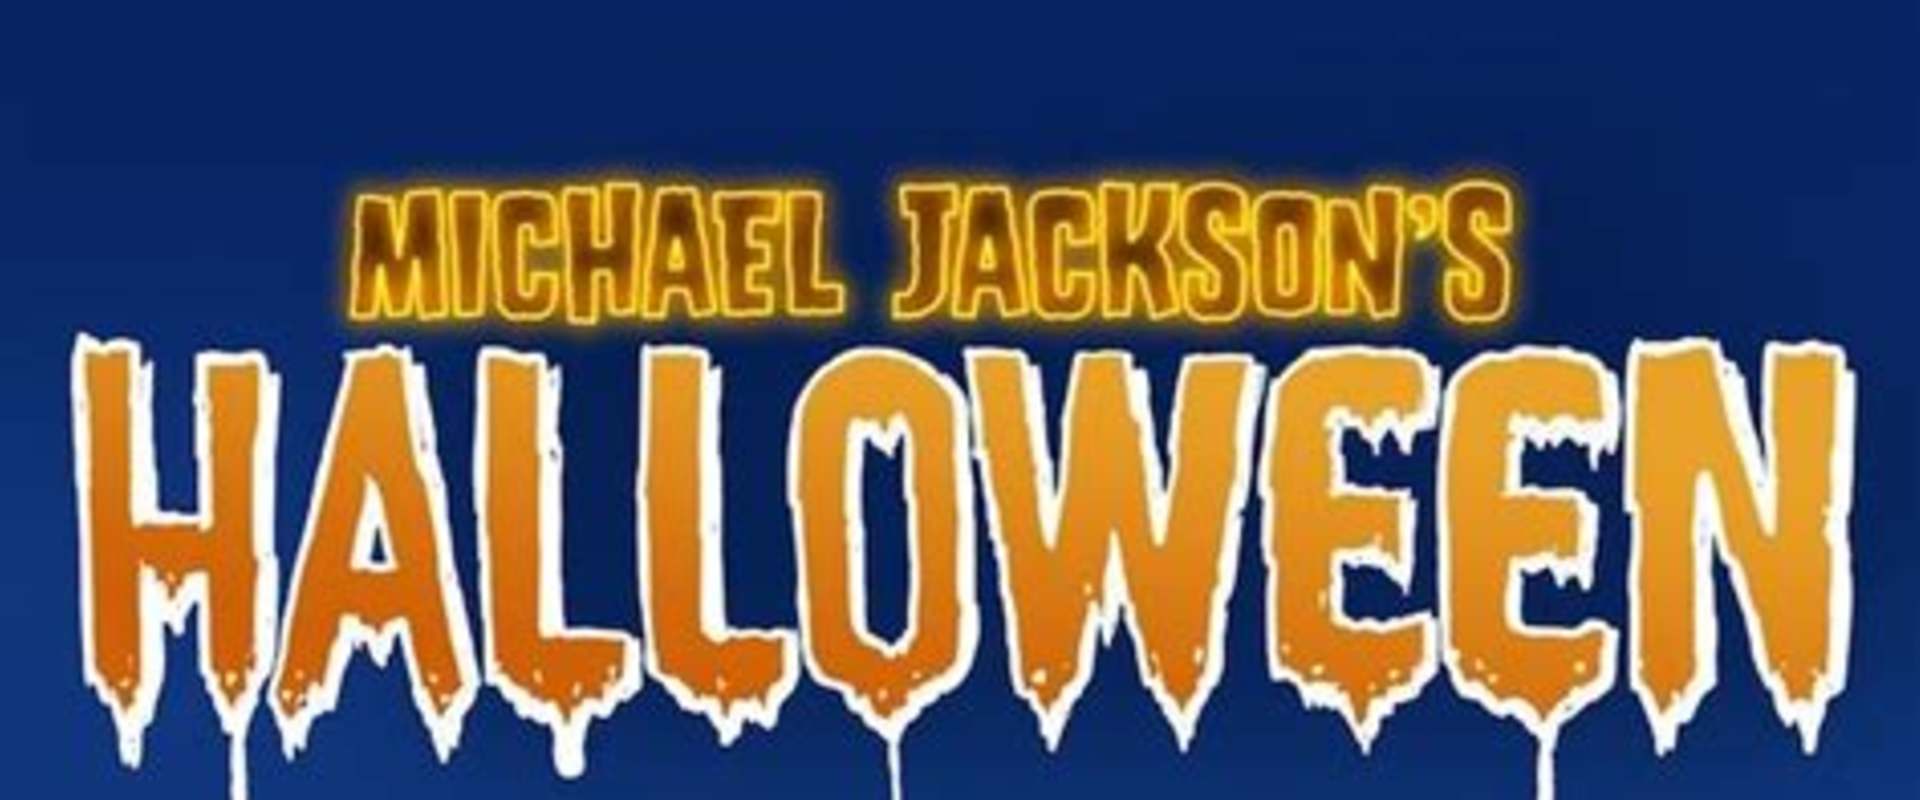 Michael Jackson's Halloween background 2